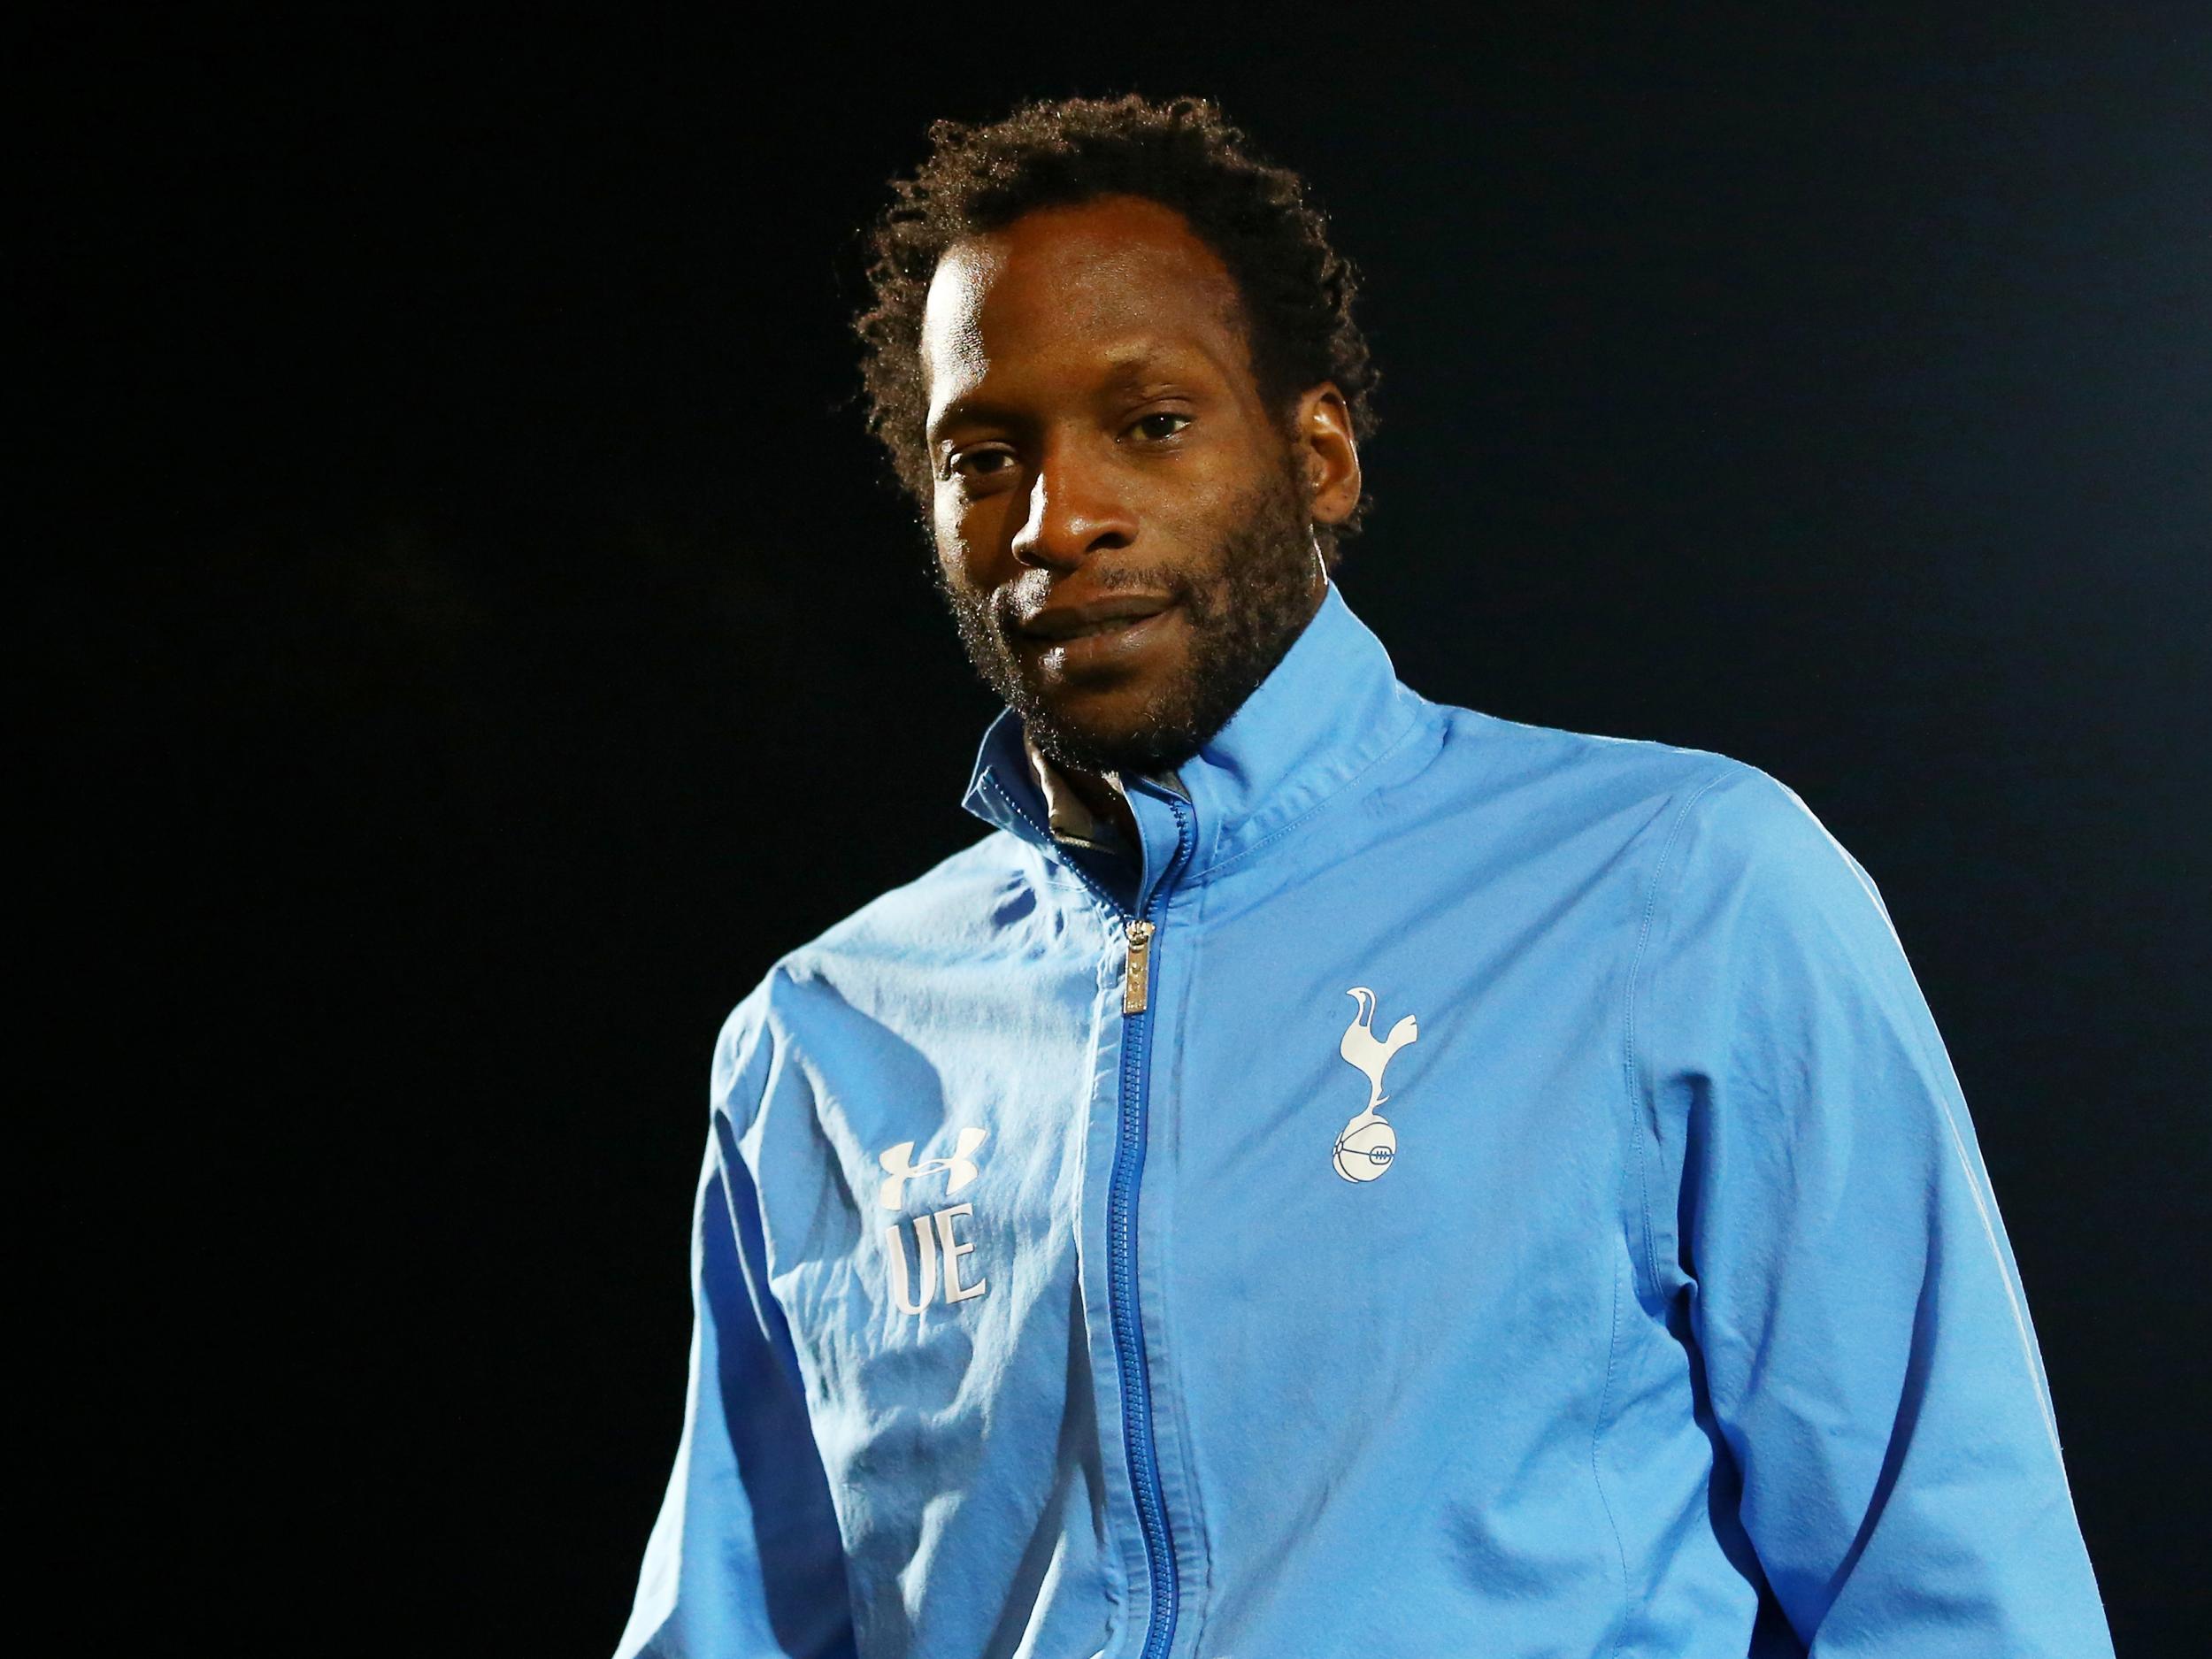 Ehiogu suffered a cardiac arrest at Tottenham Hotspur's training ground